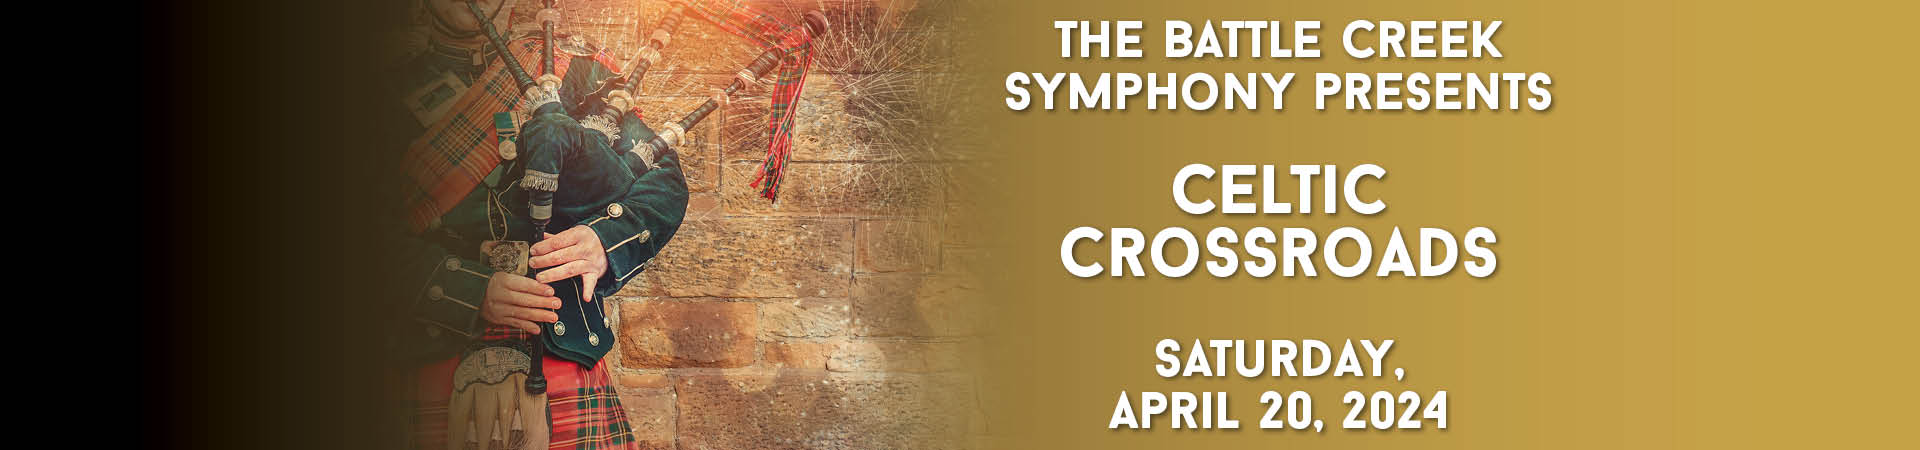 Battle Creek Symphony 5 Celtic Crossroads